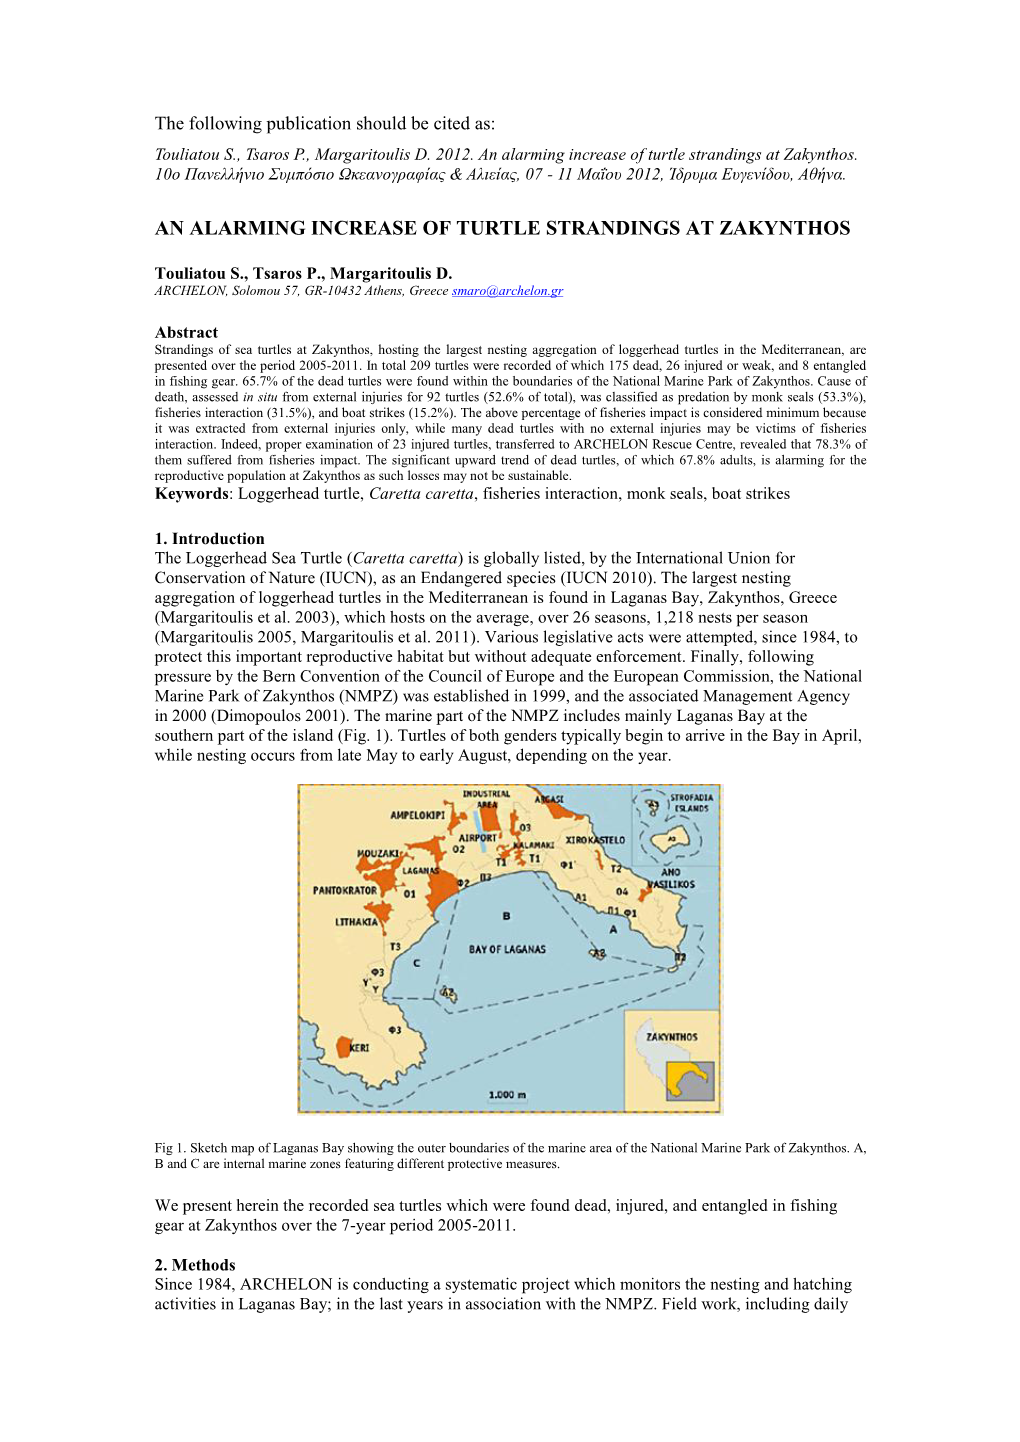 Short Description of Laganas Bay in Zakynthos As Main Nesting Area In